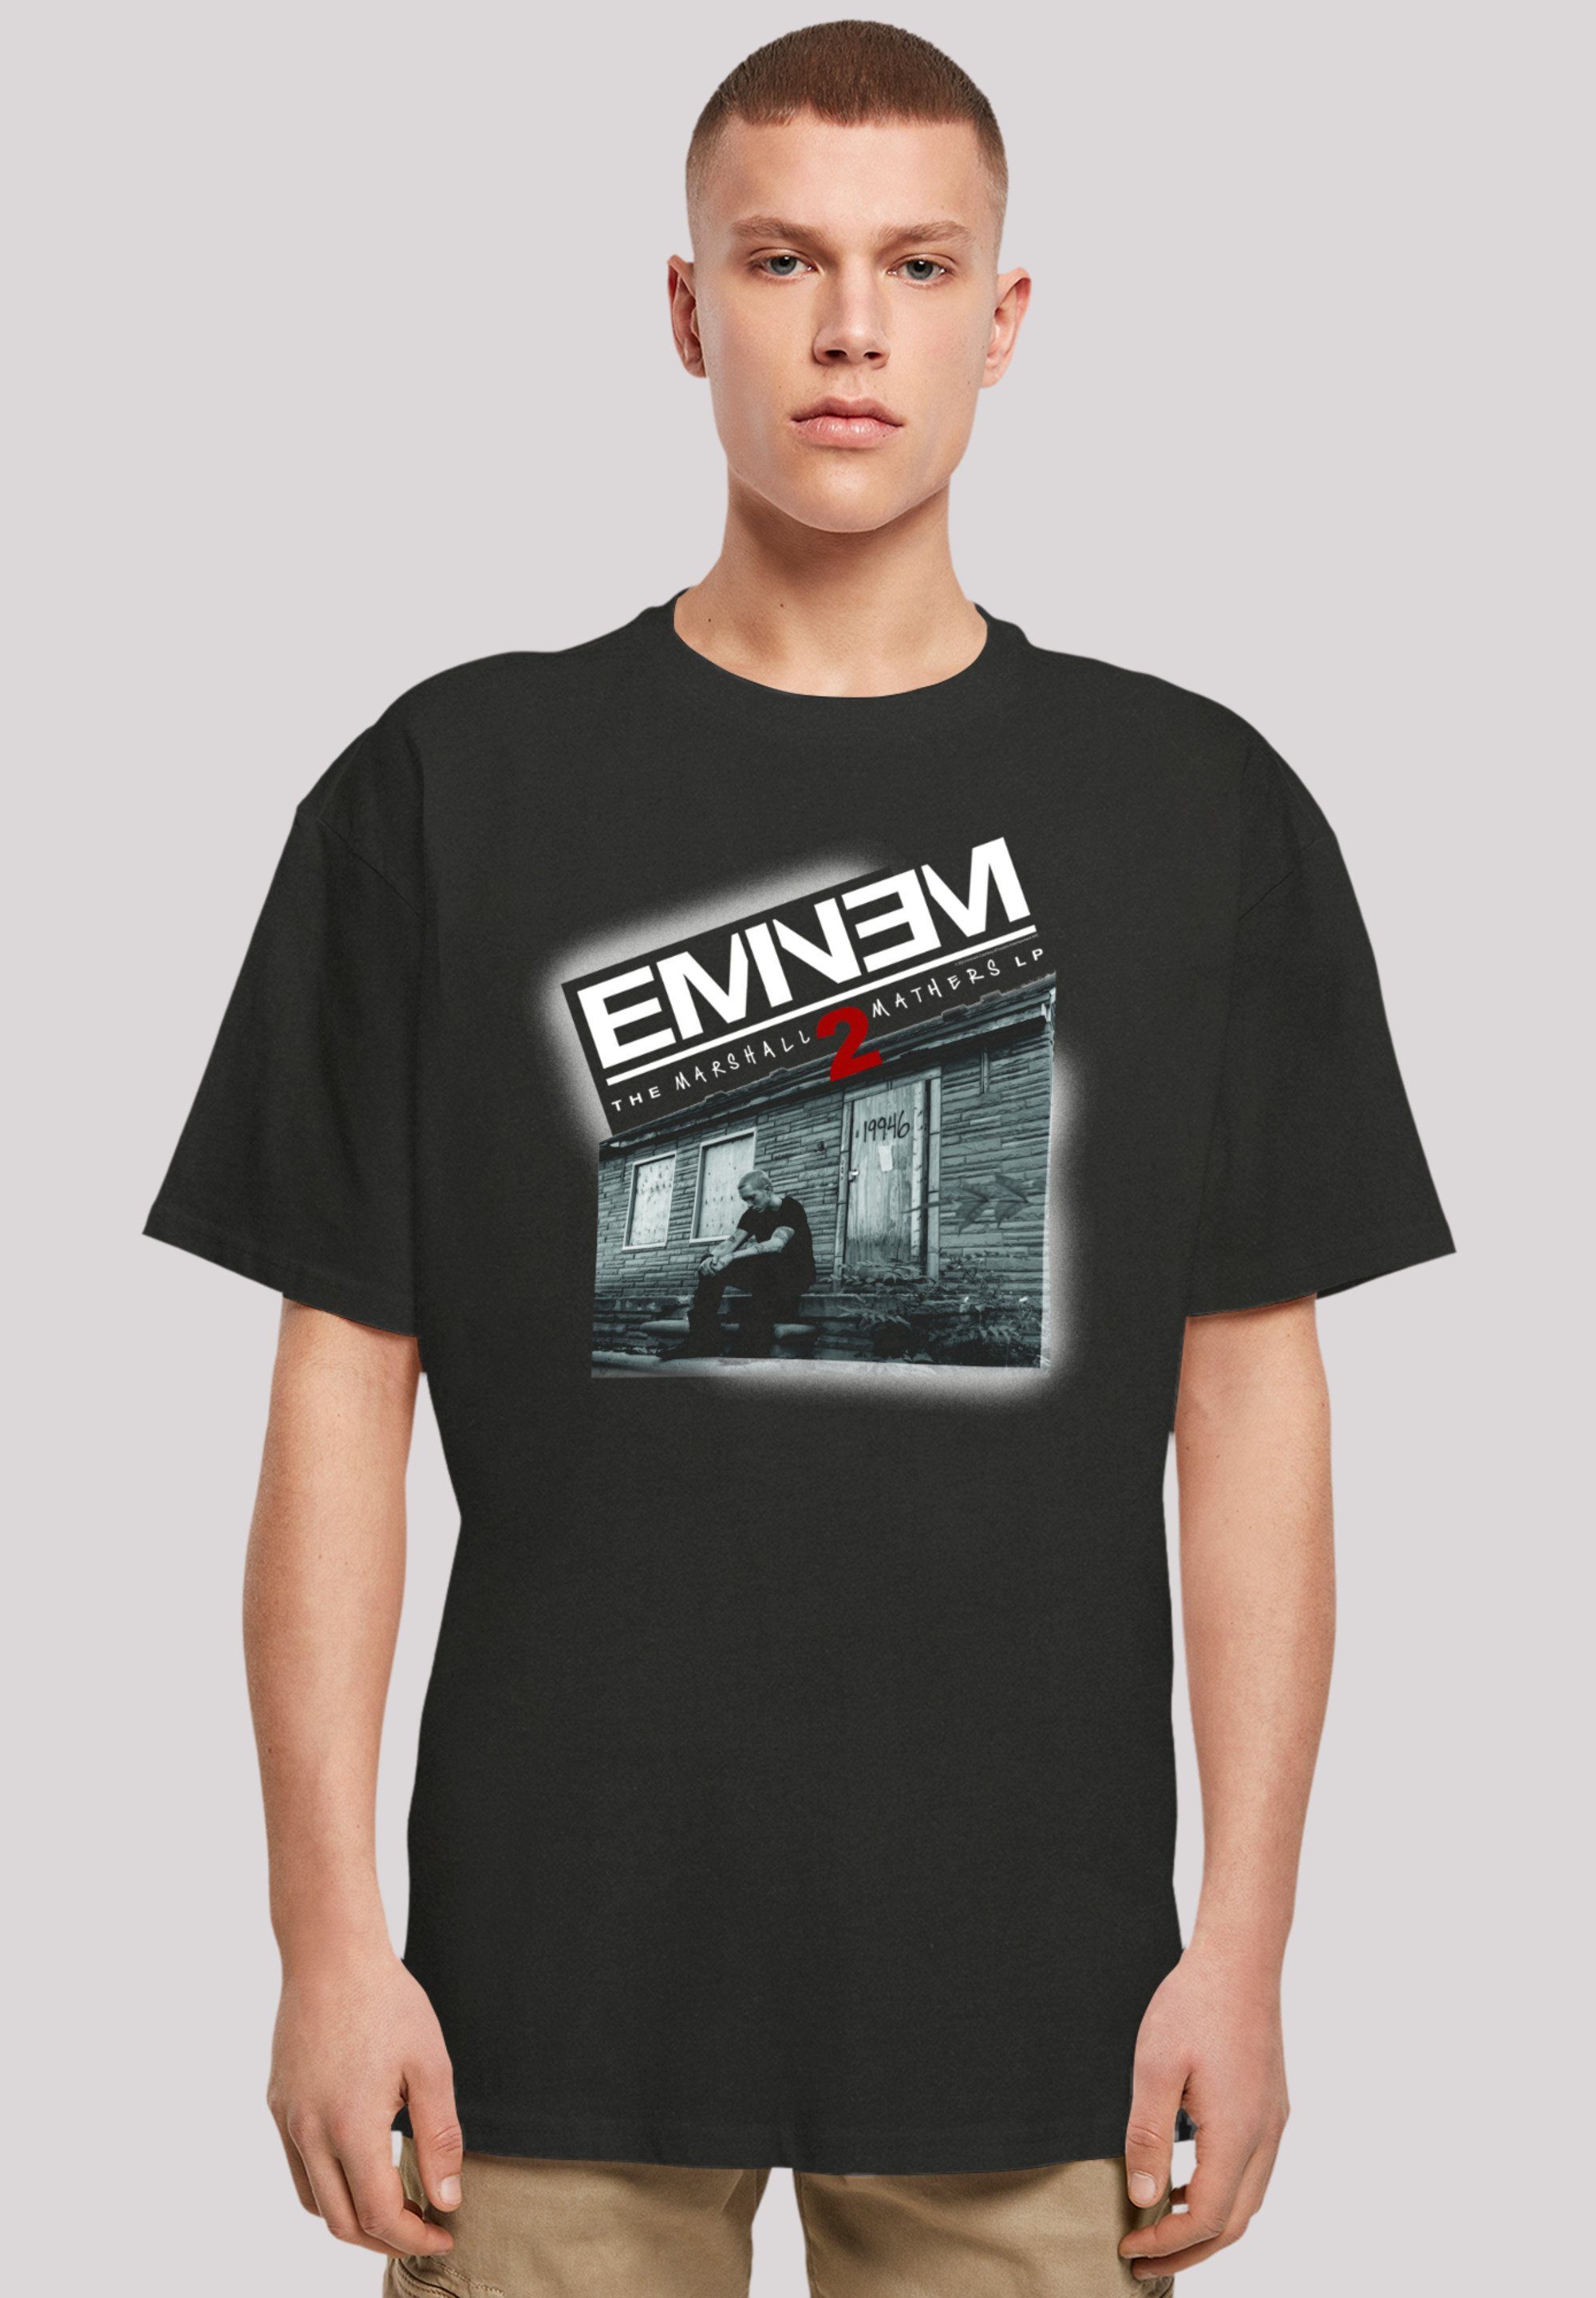 schwarz T-Shirt Qualität, Premium Marshall 2 Music Rap Eminem Mathers F4NT4STIC Musik Oldschool